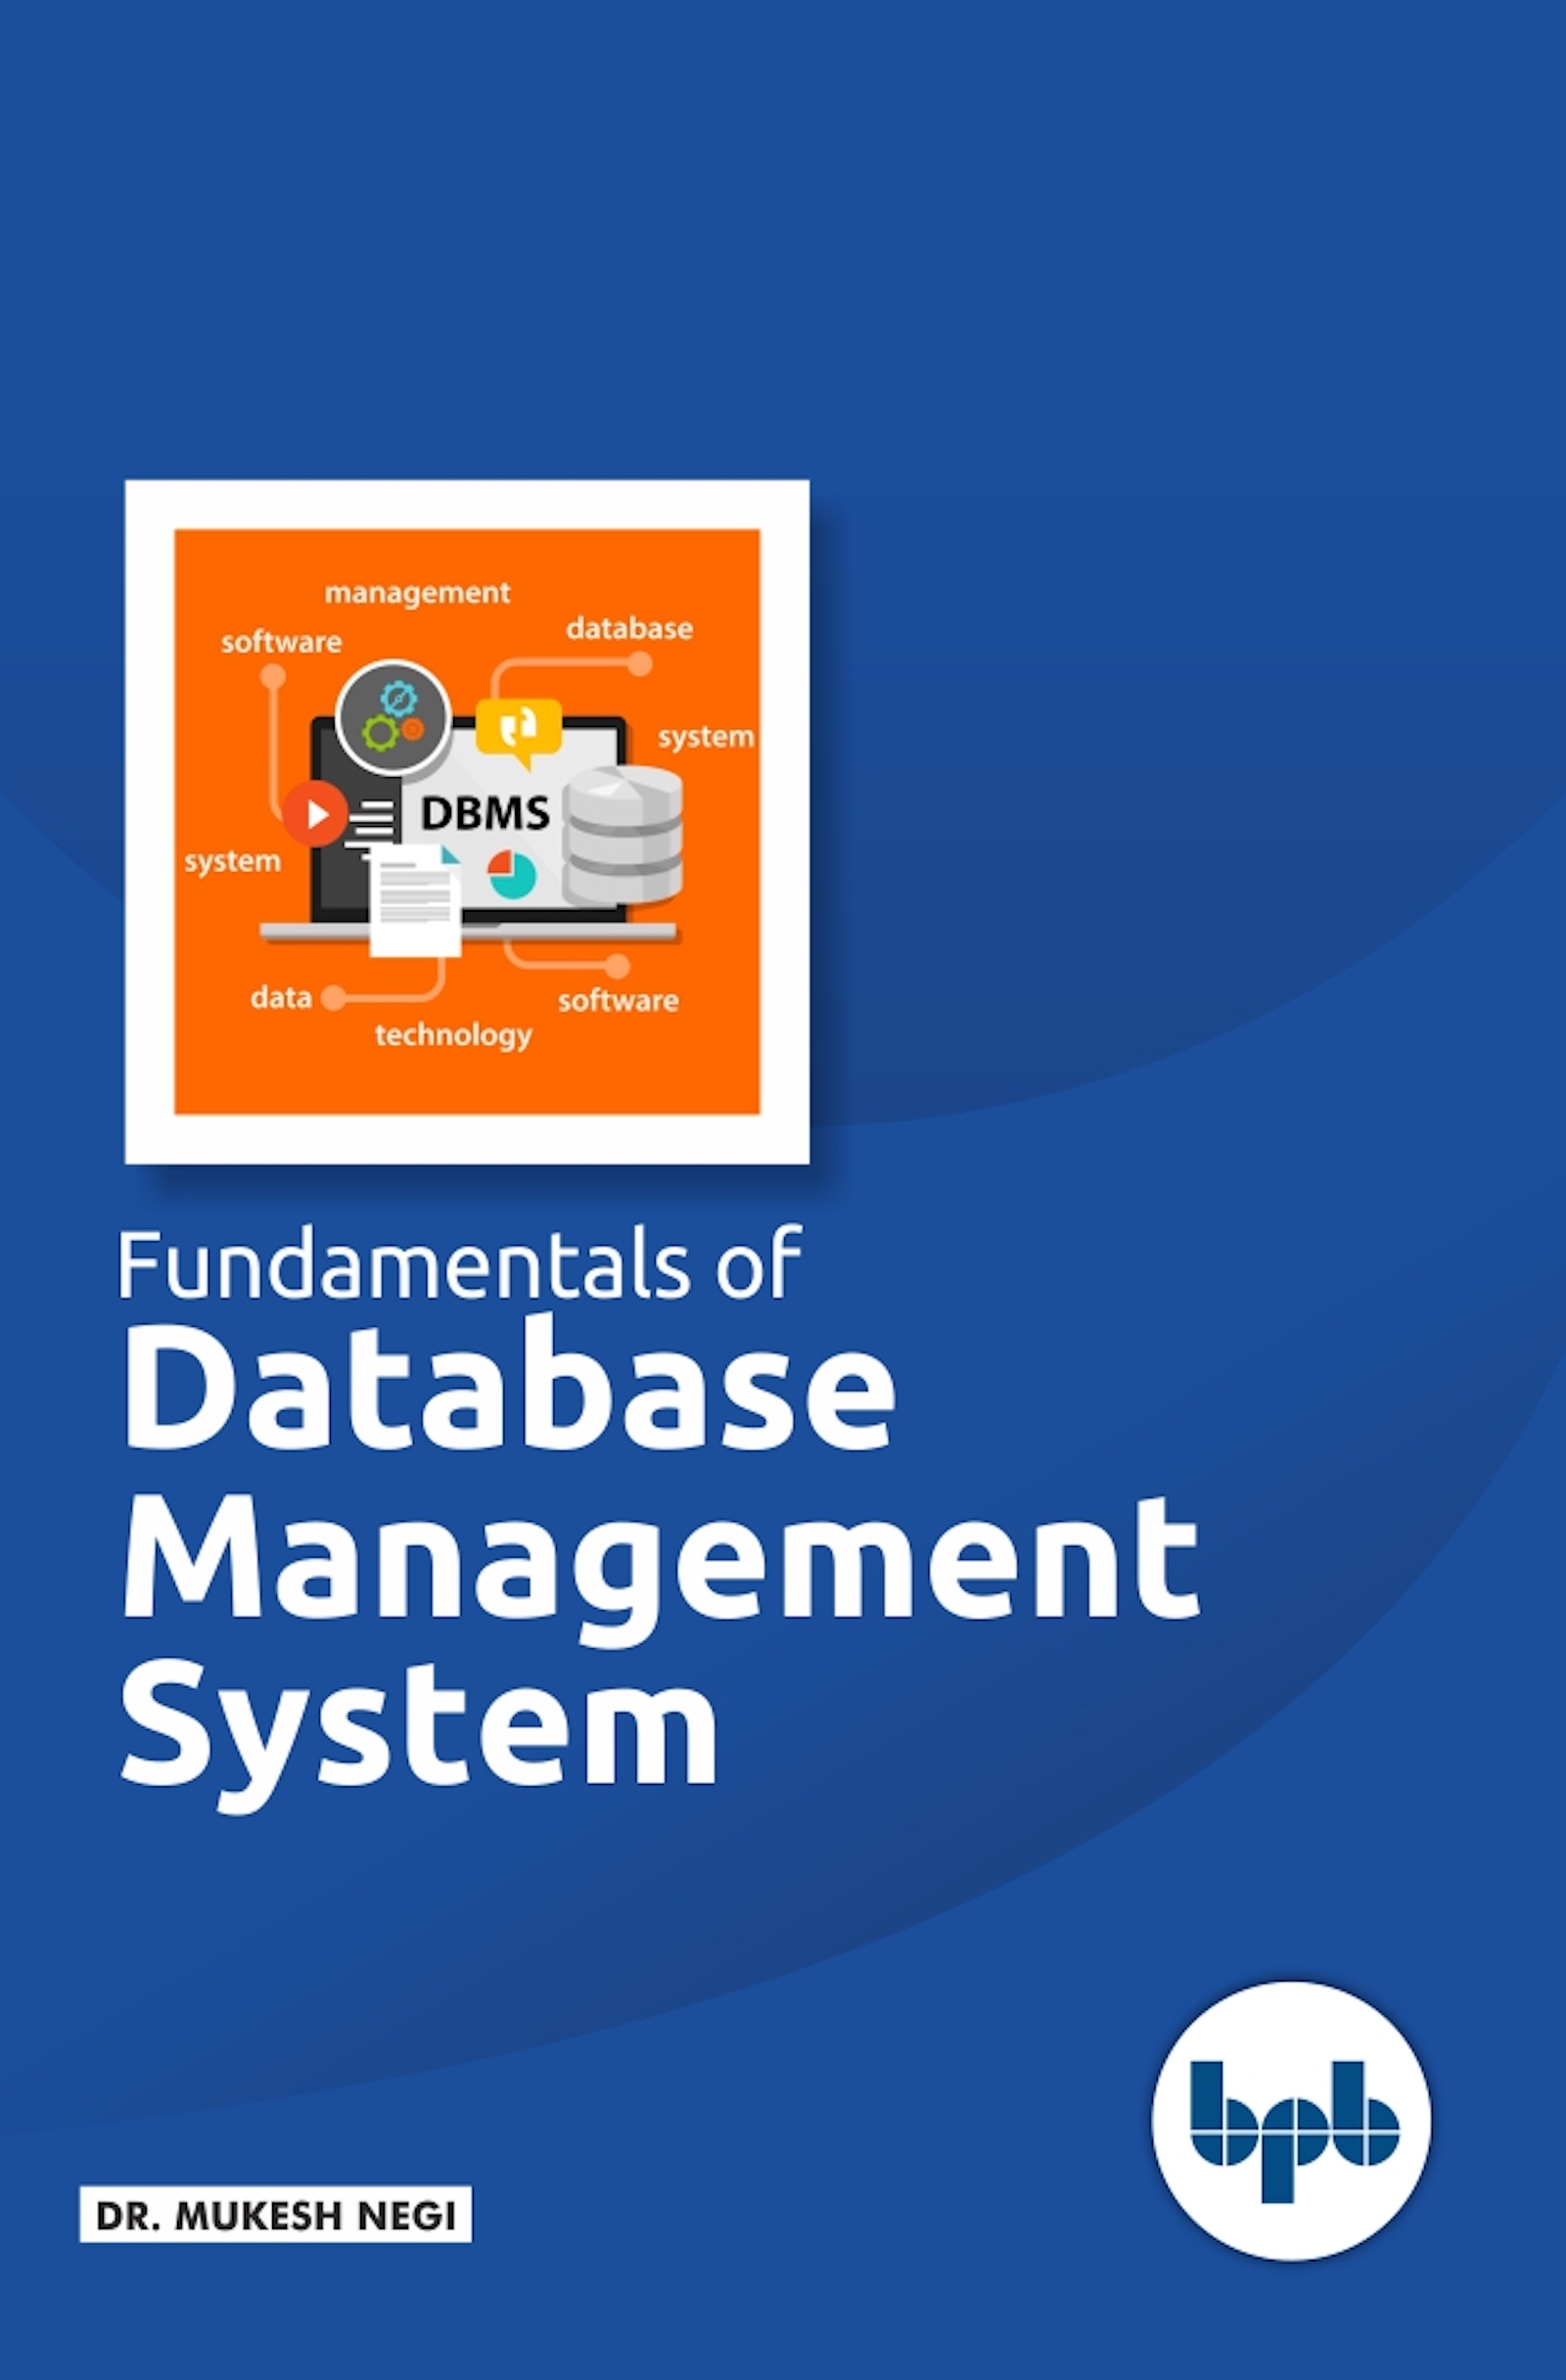 Fundamentals of Database Management System